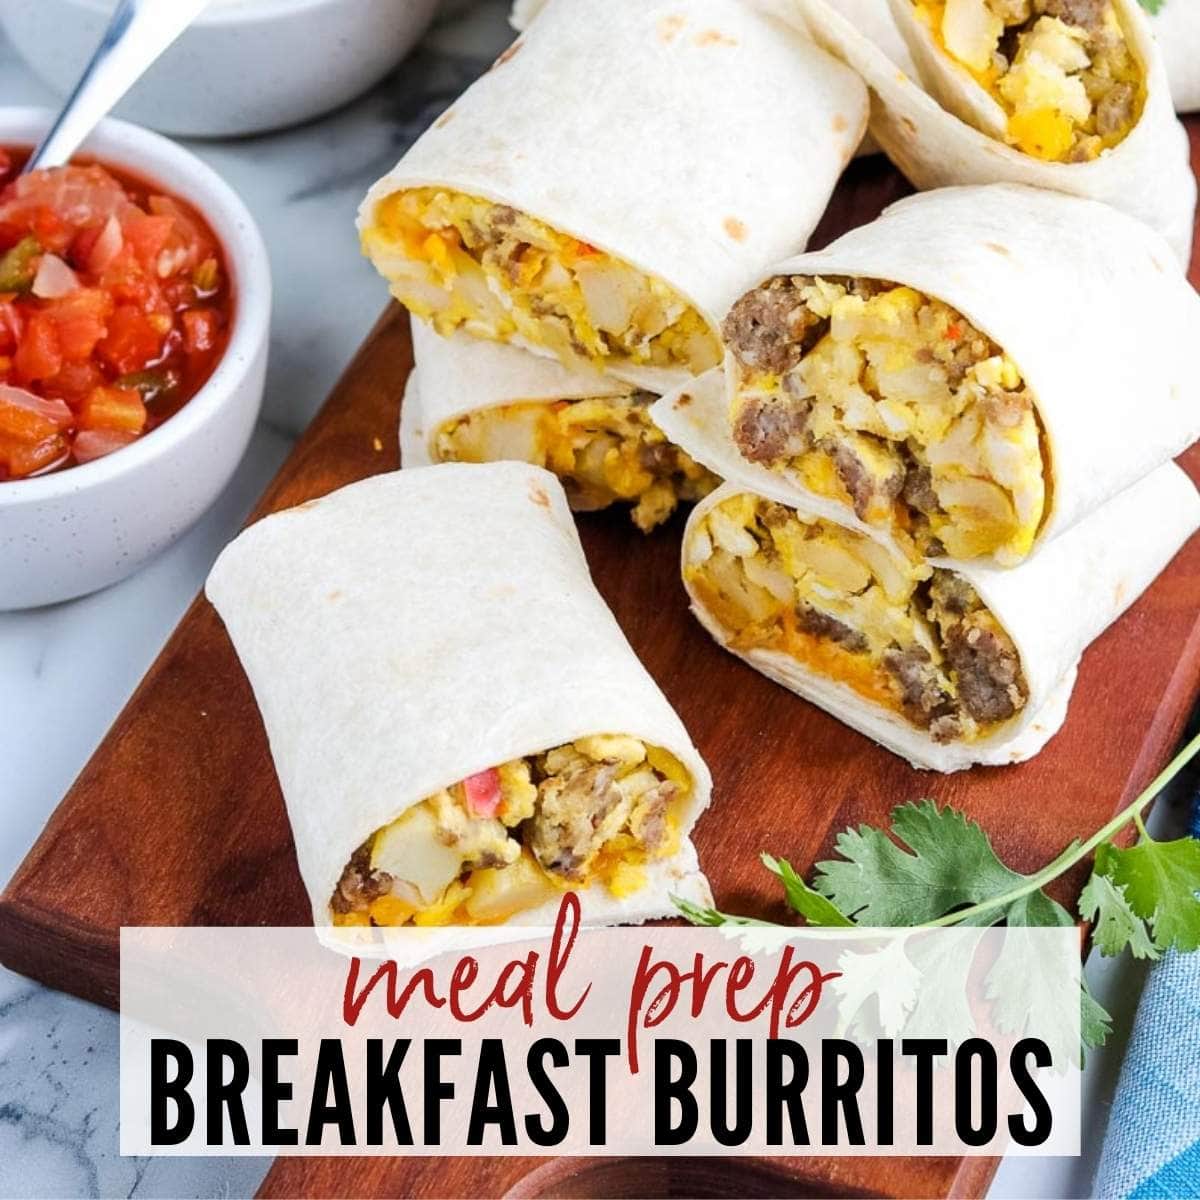 Breakfast bowls and burritos : r/MealPrepSunday